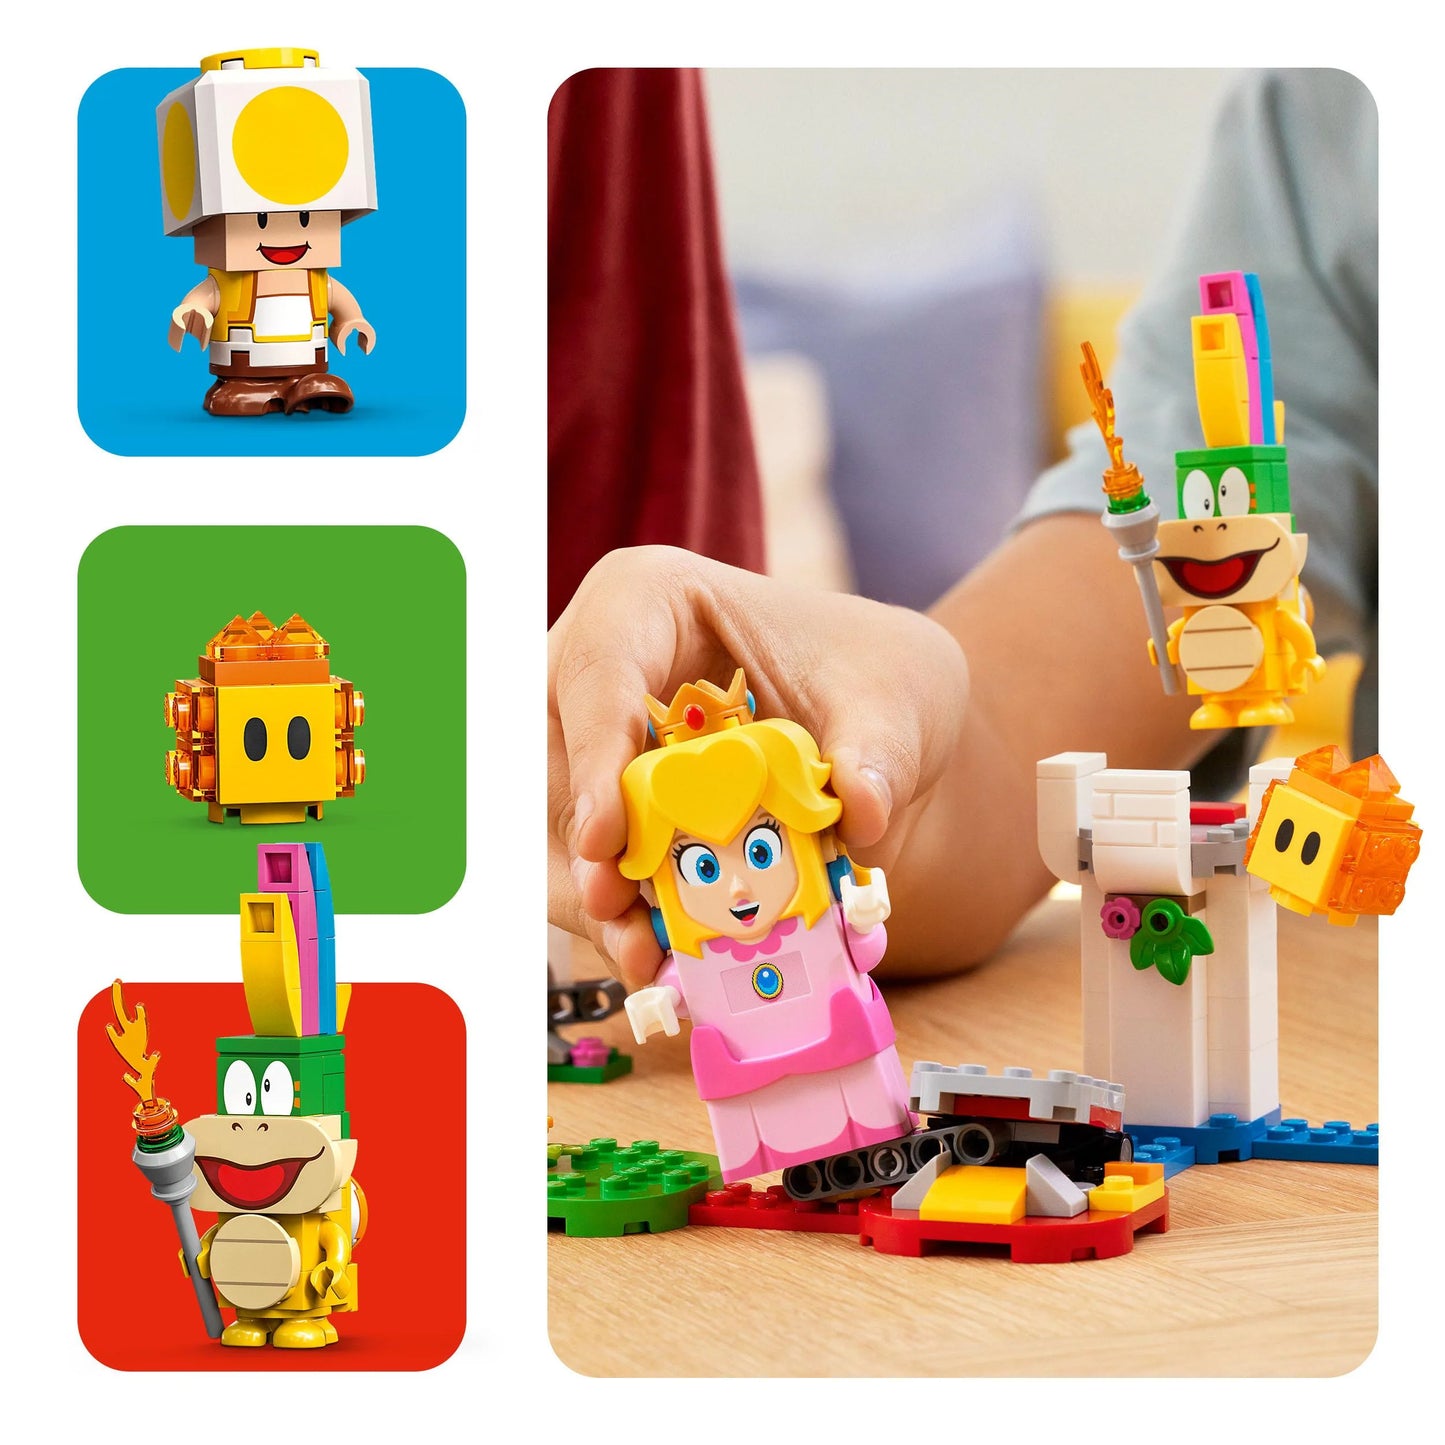 Adventures with Peach Starter Set - LEGO Super Mario